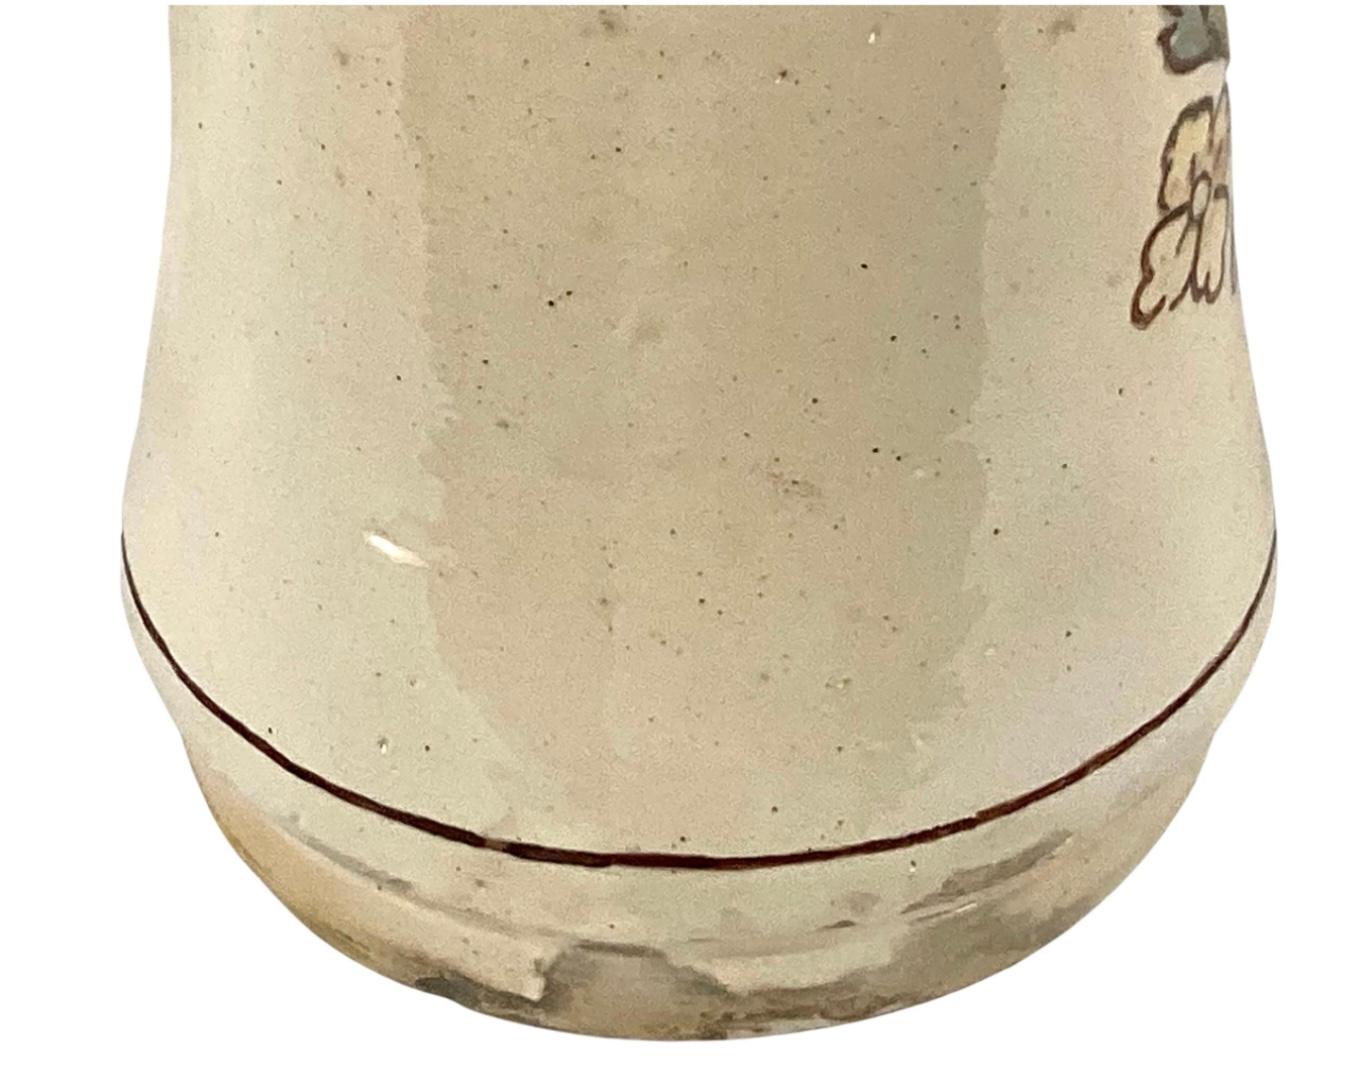 Antique 18th Century Italian Ceramic Apothecary Jar In Good Condition For Sale In Bradenton, FL